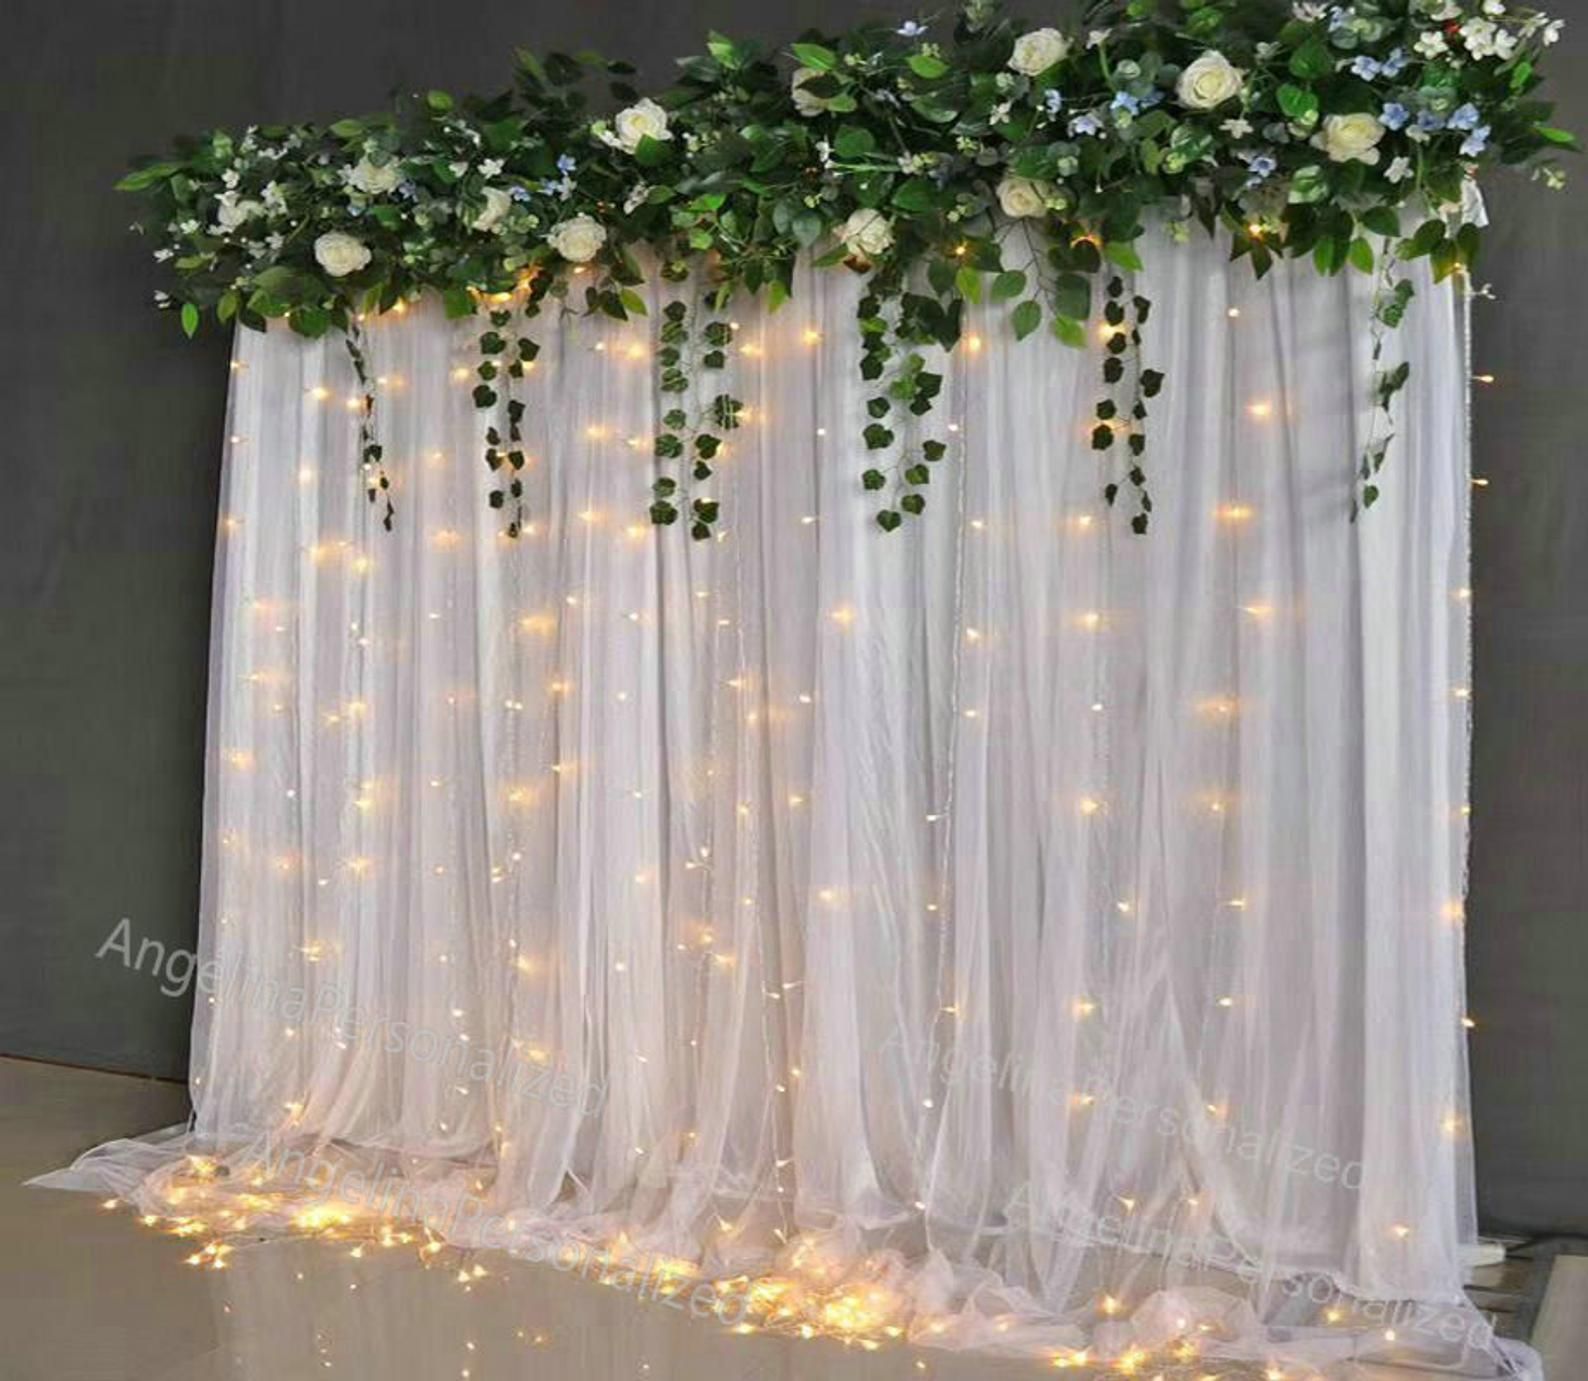 White Tulle Chiffon Backdrops for Bridal Shower Photography Wedding Backdrop Curtains,Newborn Baby Shower Party Background Wedding Decor -   19 diy Wedding backdrop ideas